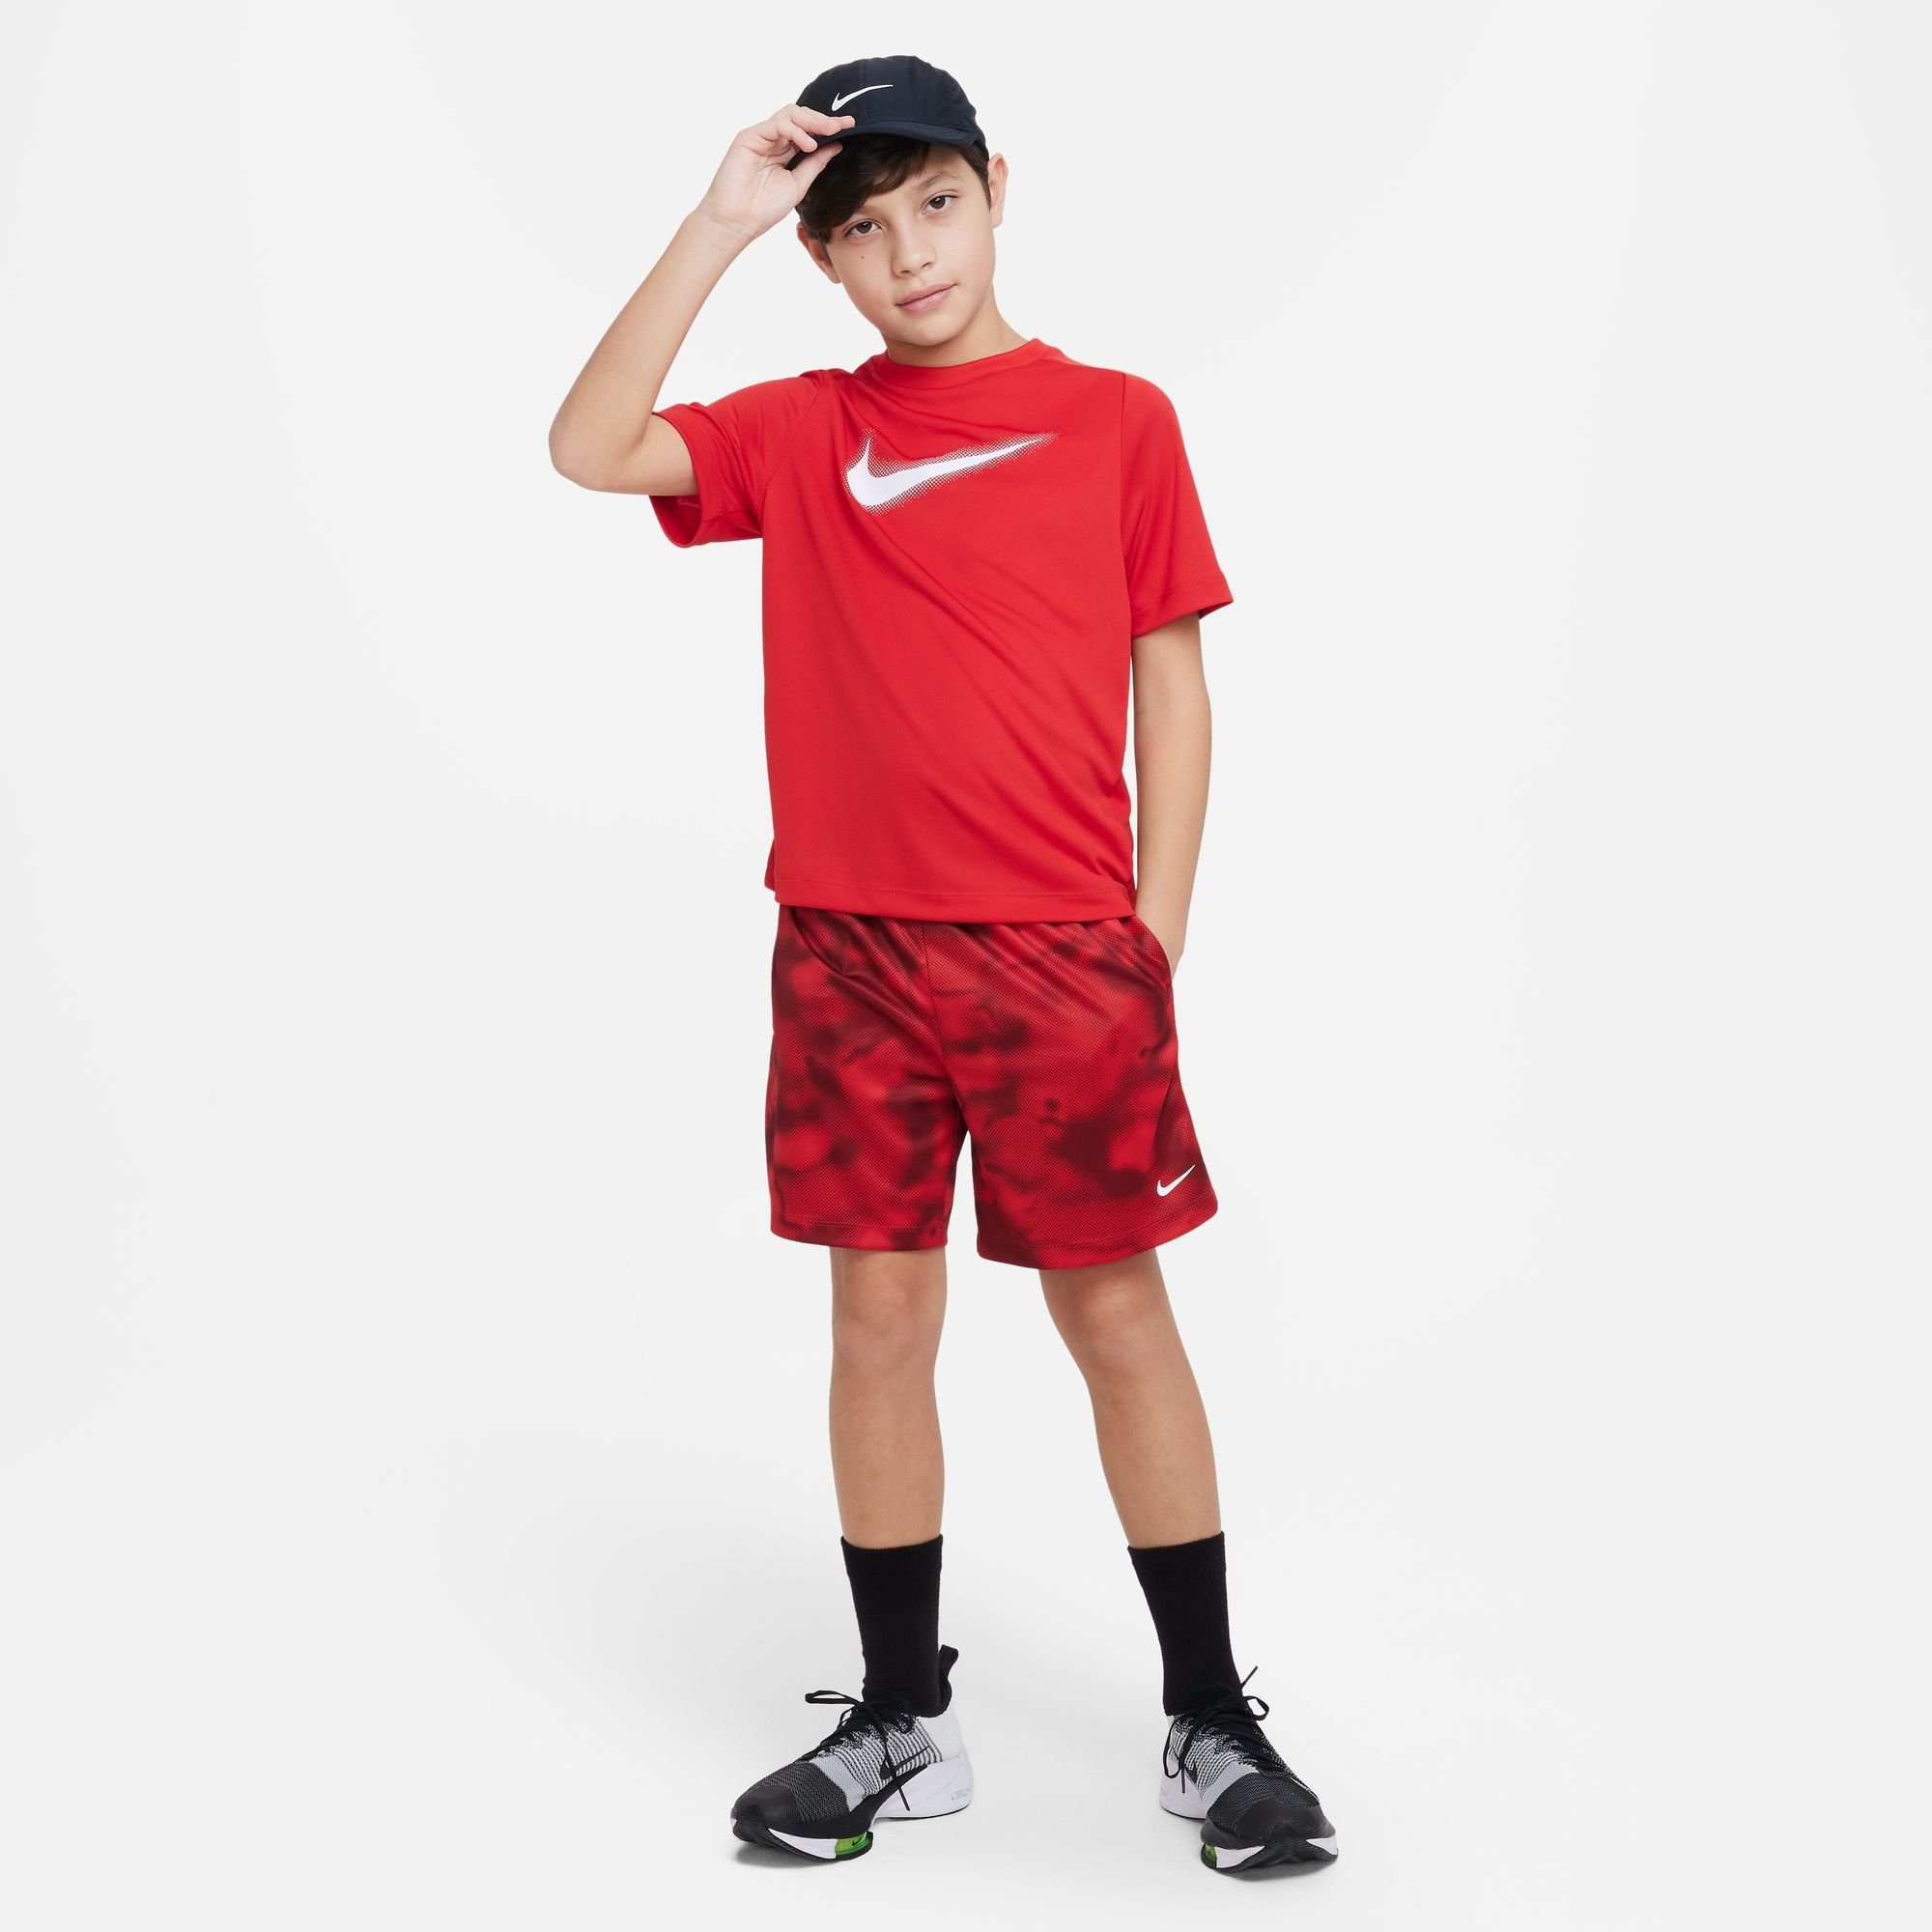 GRAPHIC rot TRAINING TOP BIG DRI-FIT Nike (BOYS) Trainingsshirt MULTI+ KIDS'